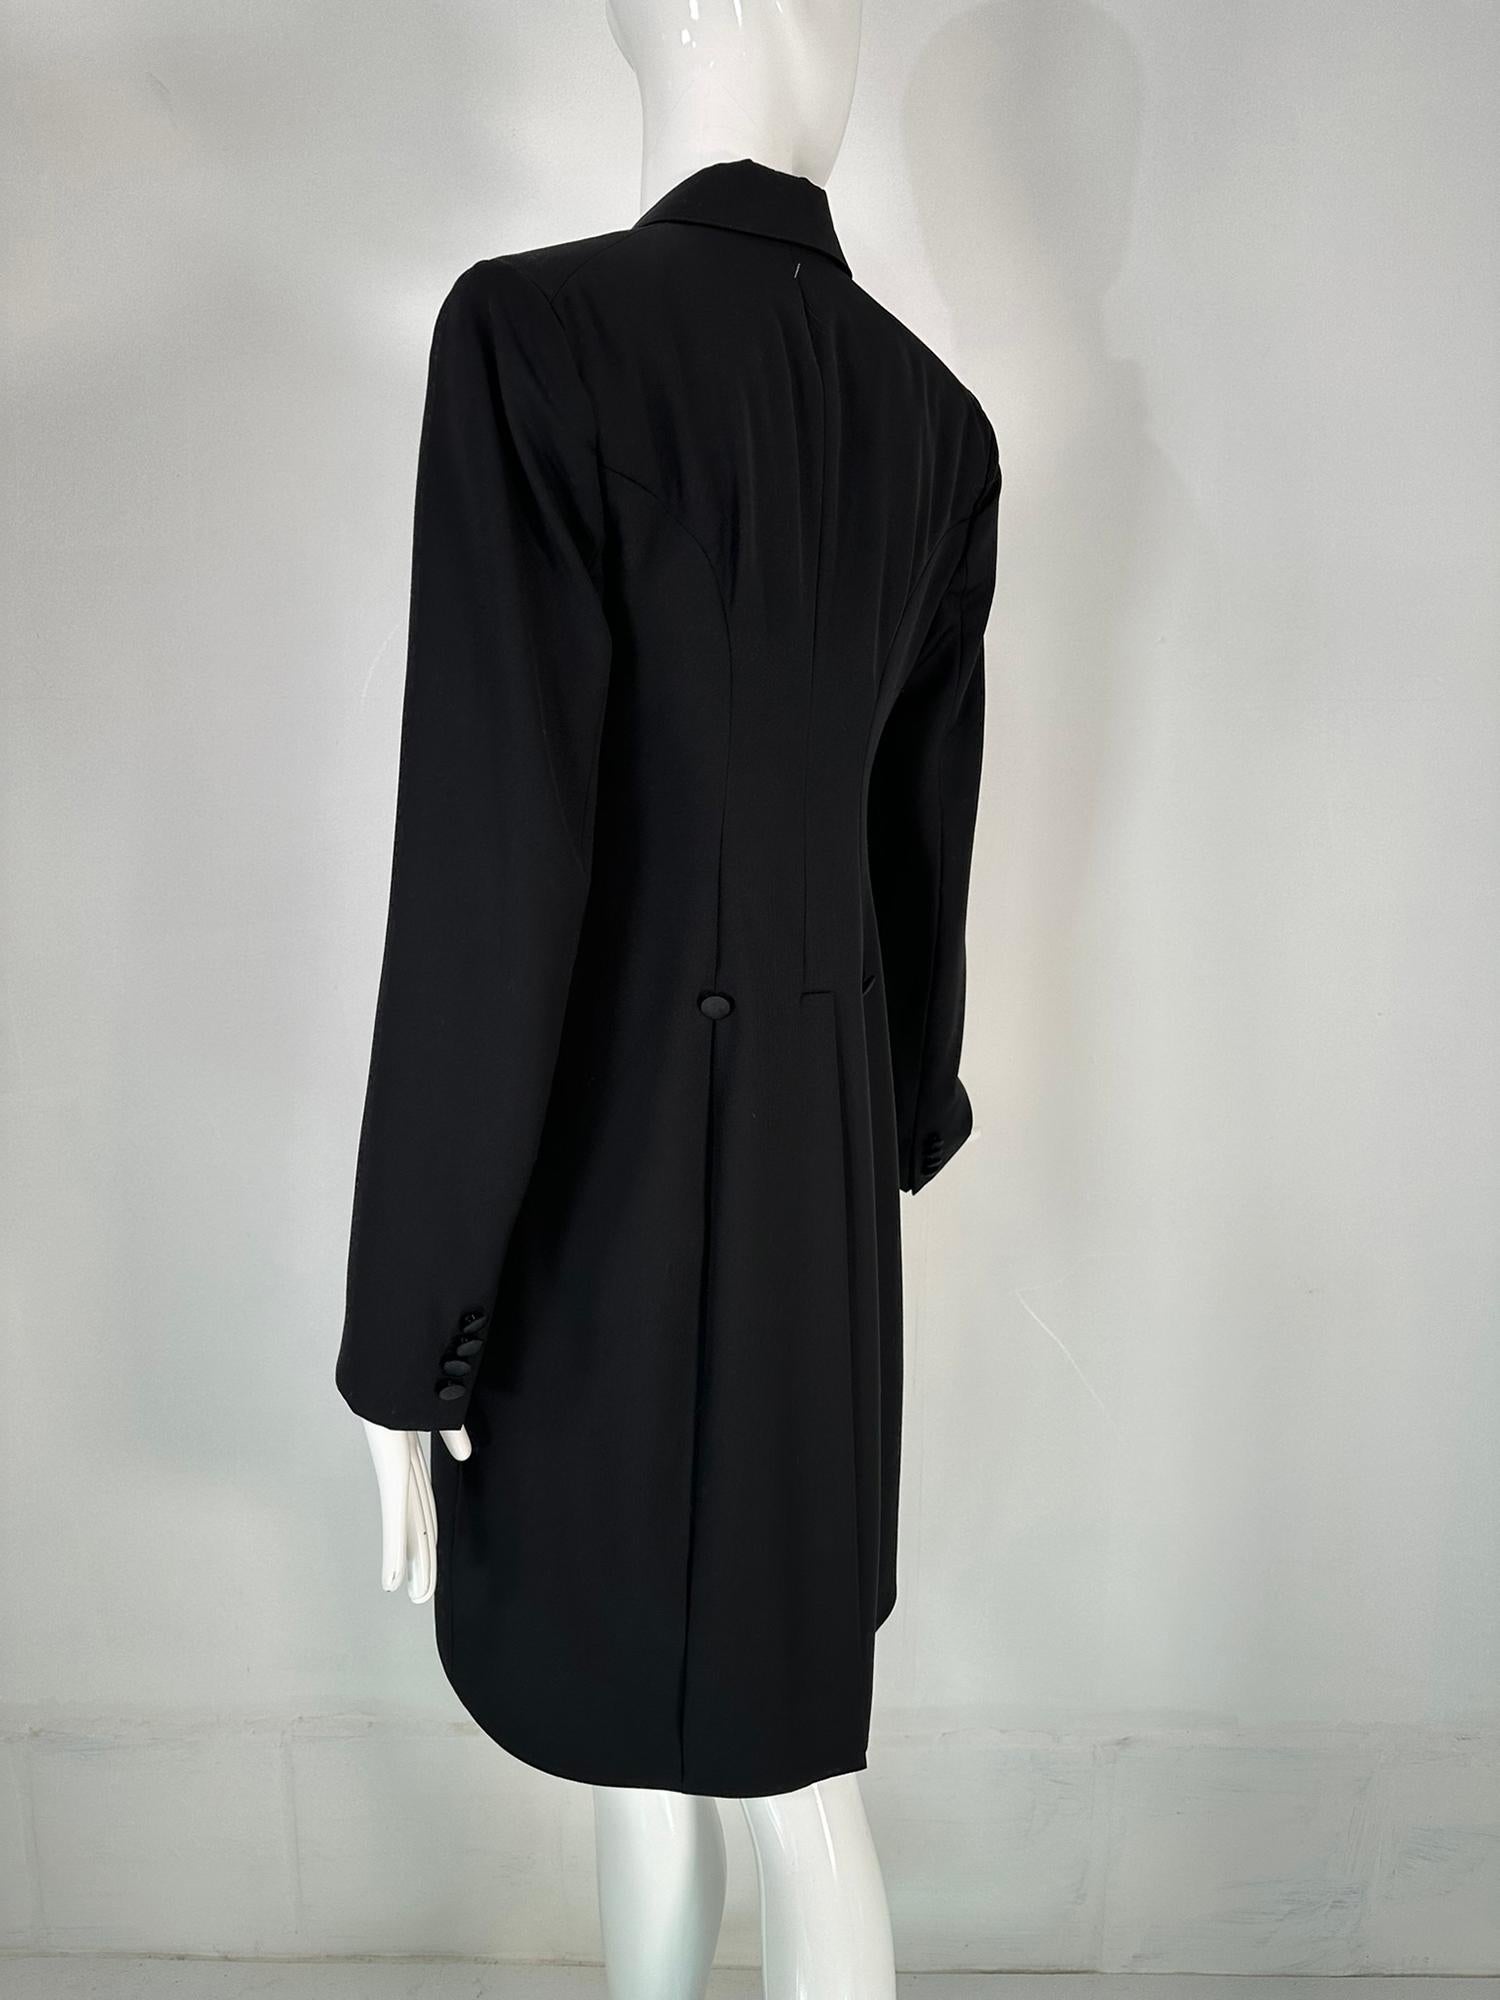 Ralph Lauren Women's Black Fine Wool & Silk Cutaway Evening Tail Coat 8 For Sale 5